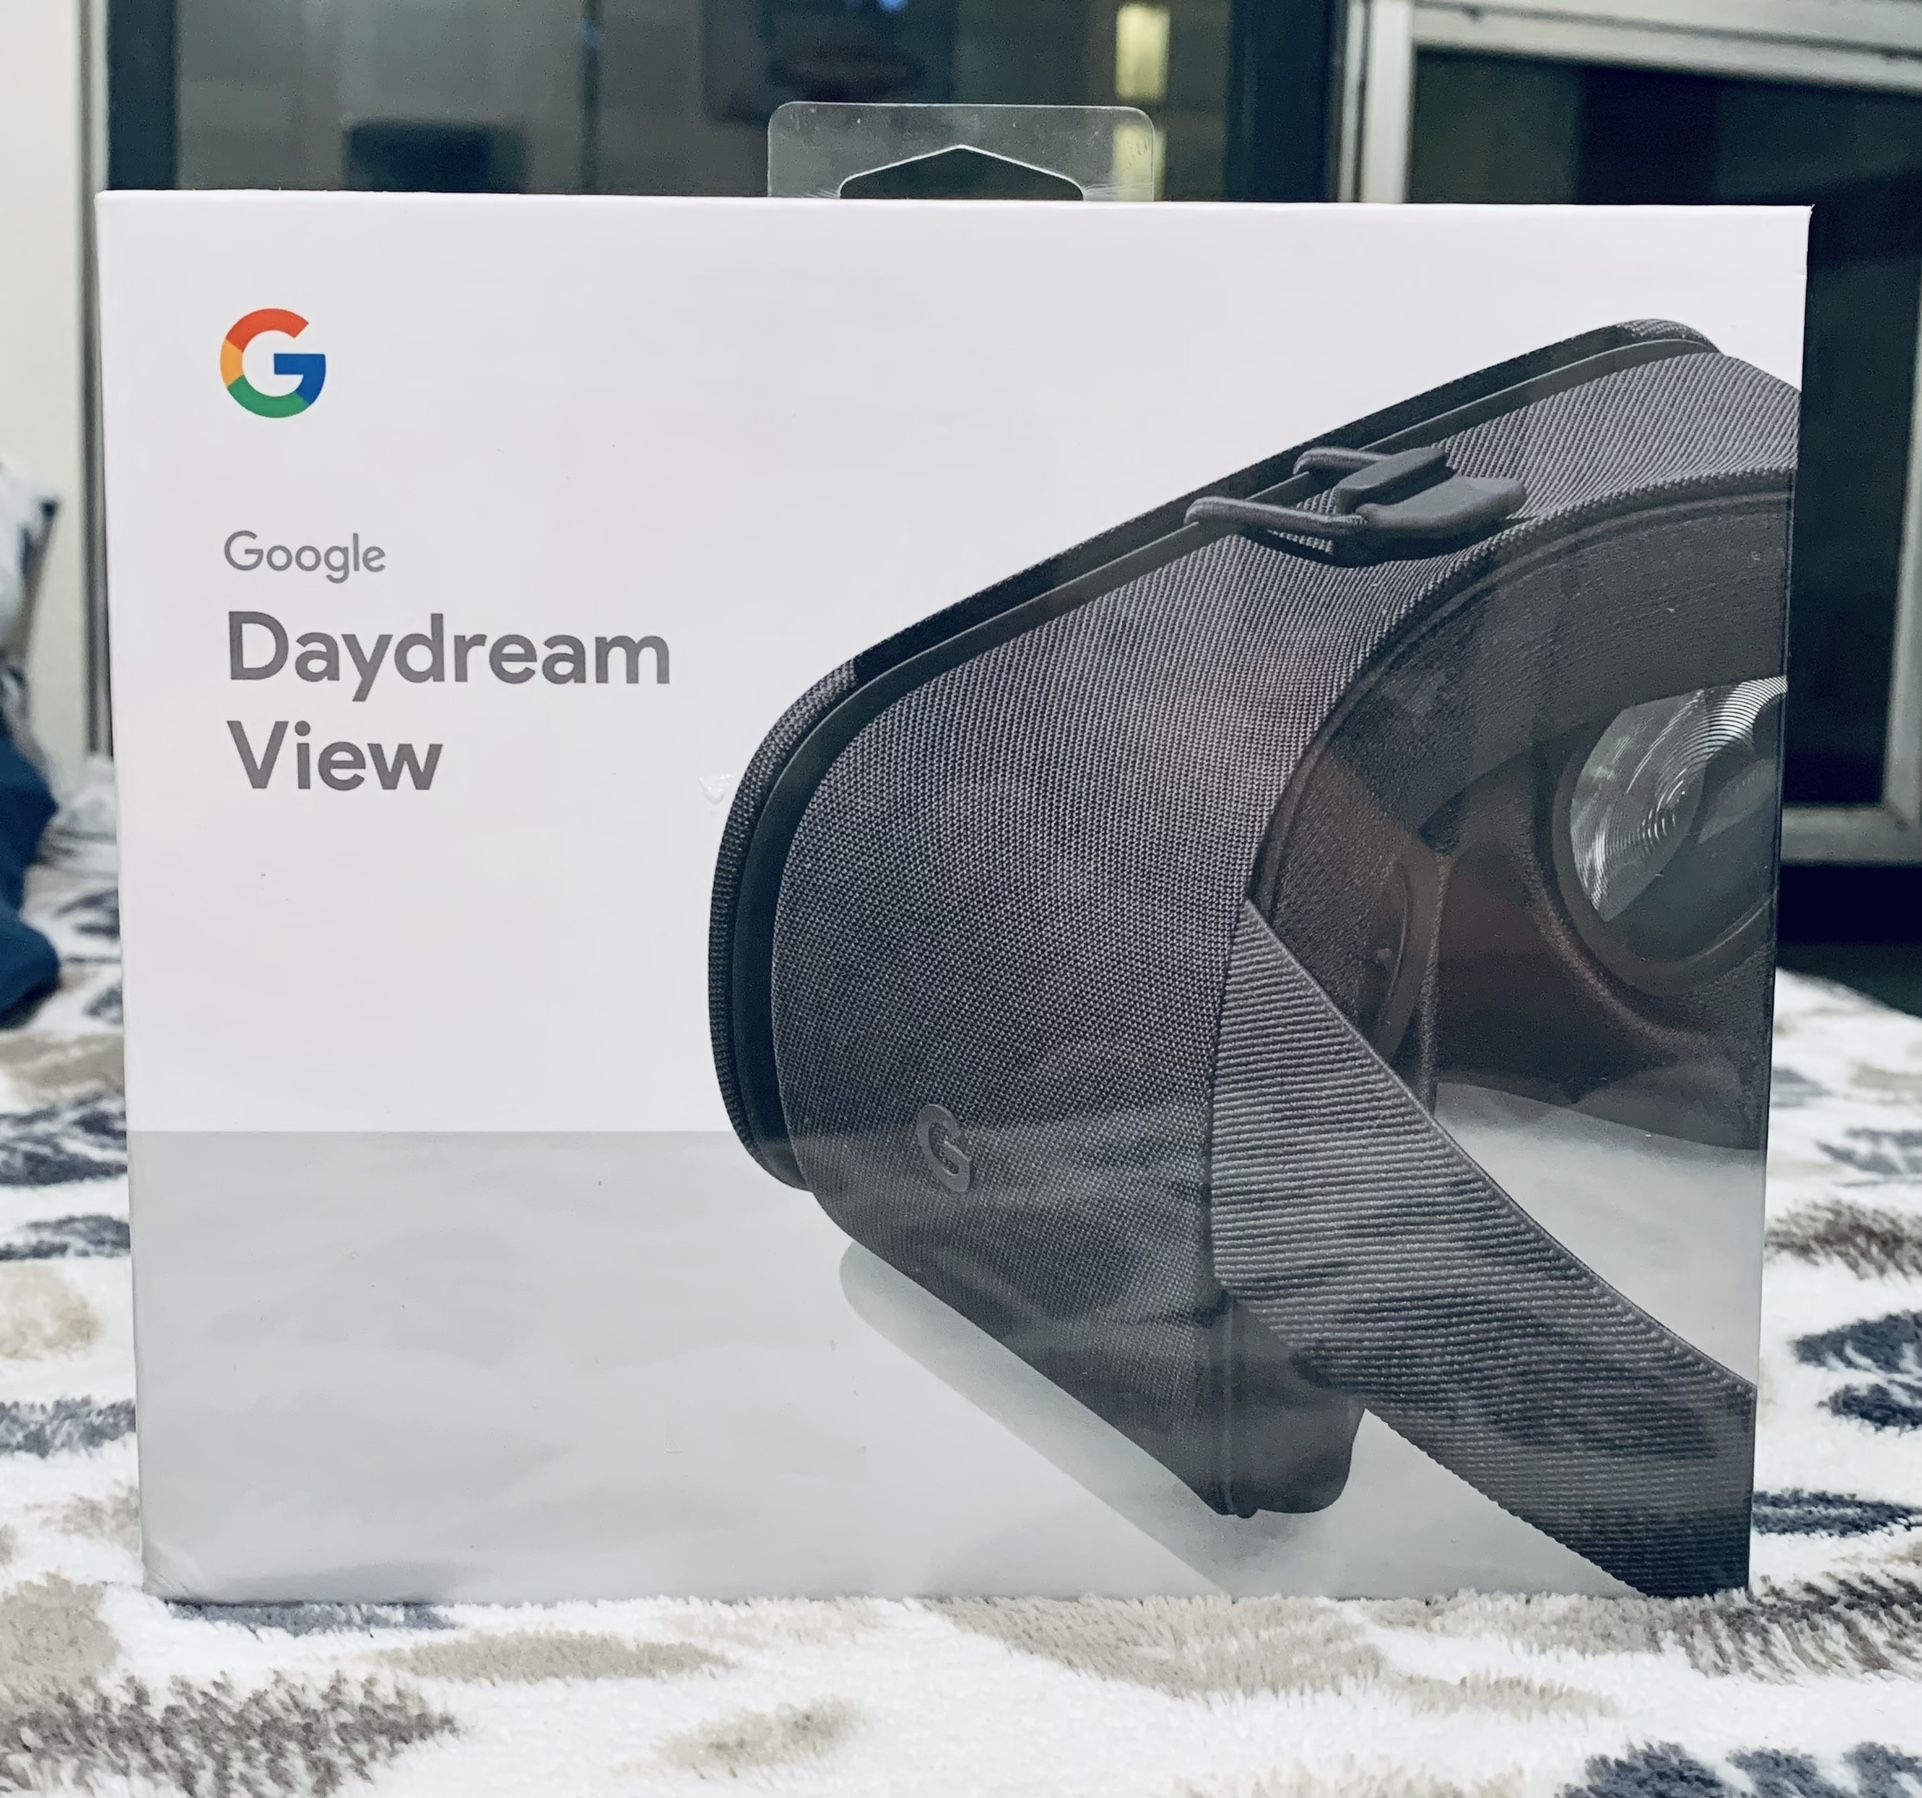 Google Daydream View - VR Headset